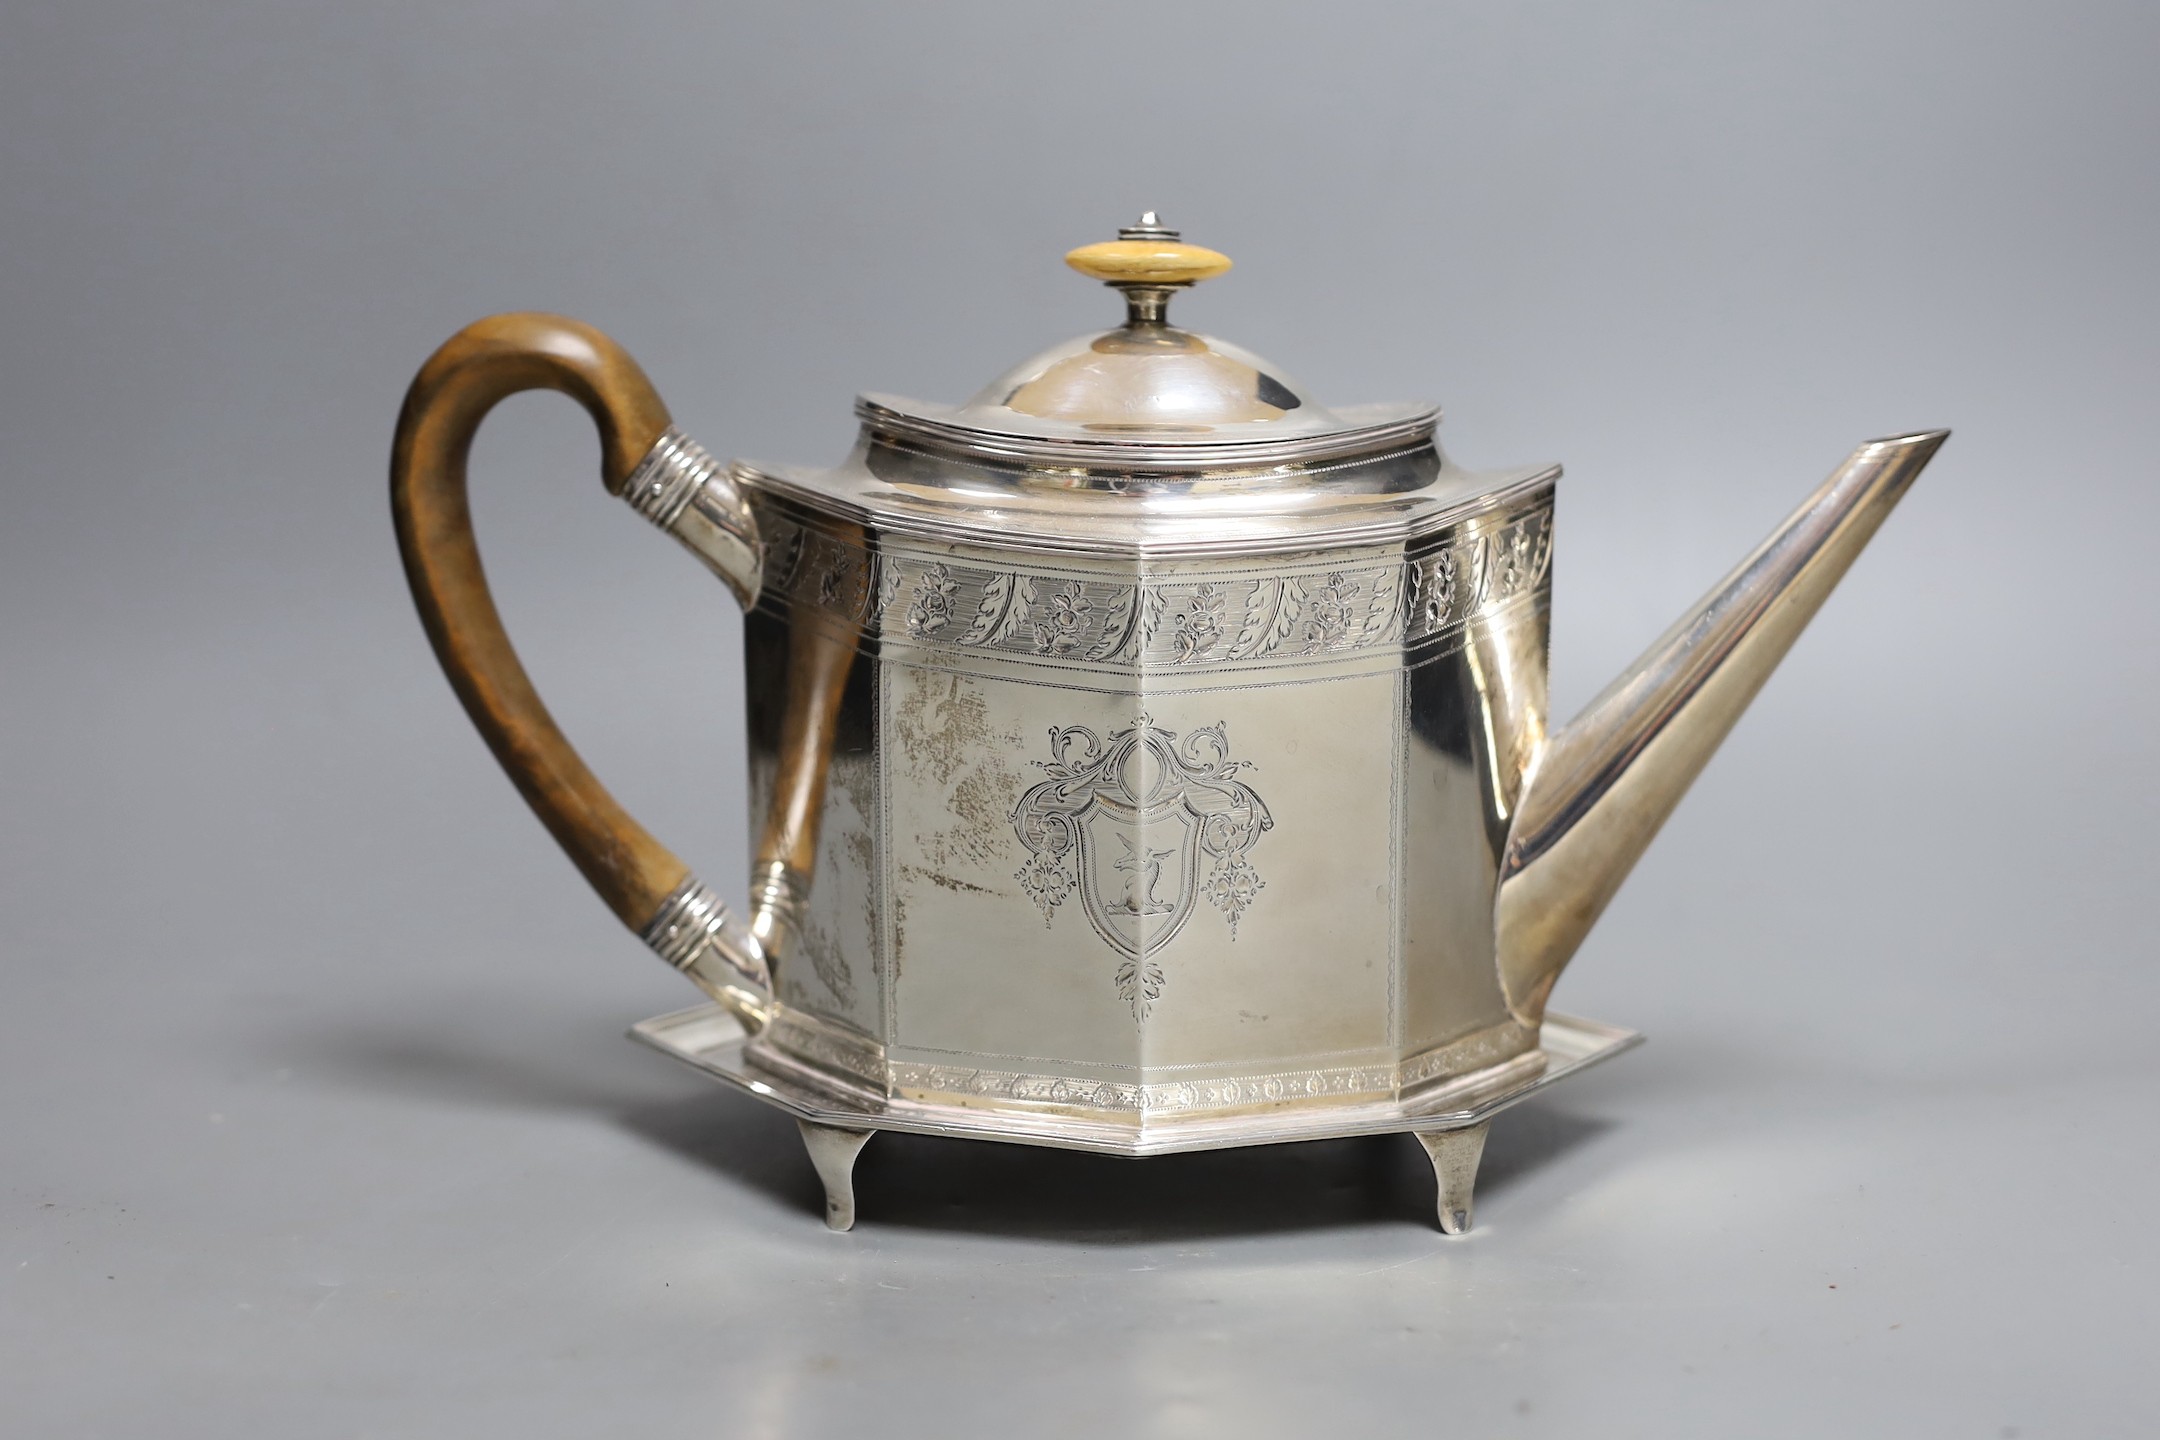 A George III silver octagonal teapot on matching stand, John Robins, London, 1795, stand length 19.6cm, gross weight 21.7oz.                                                                                                